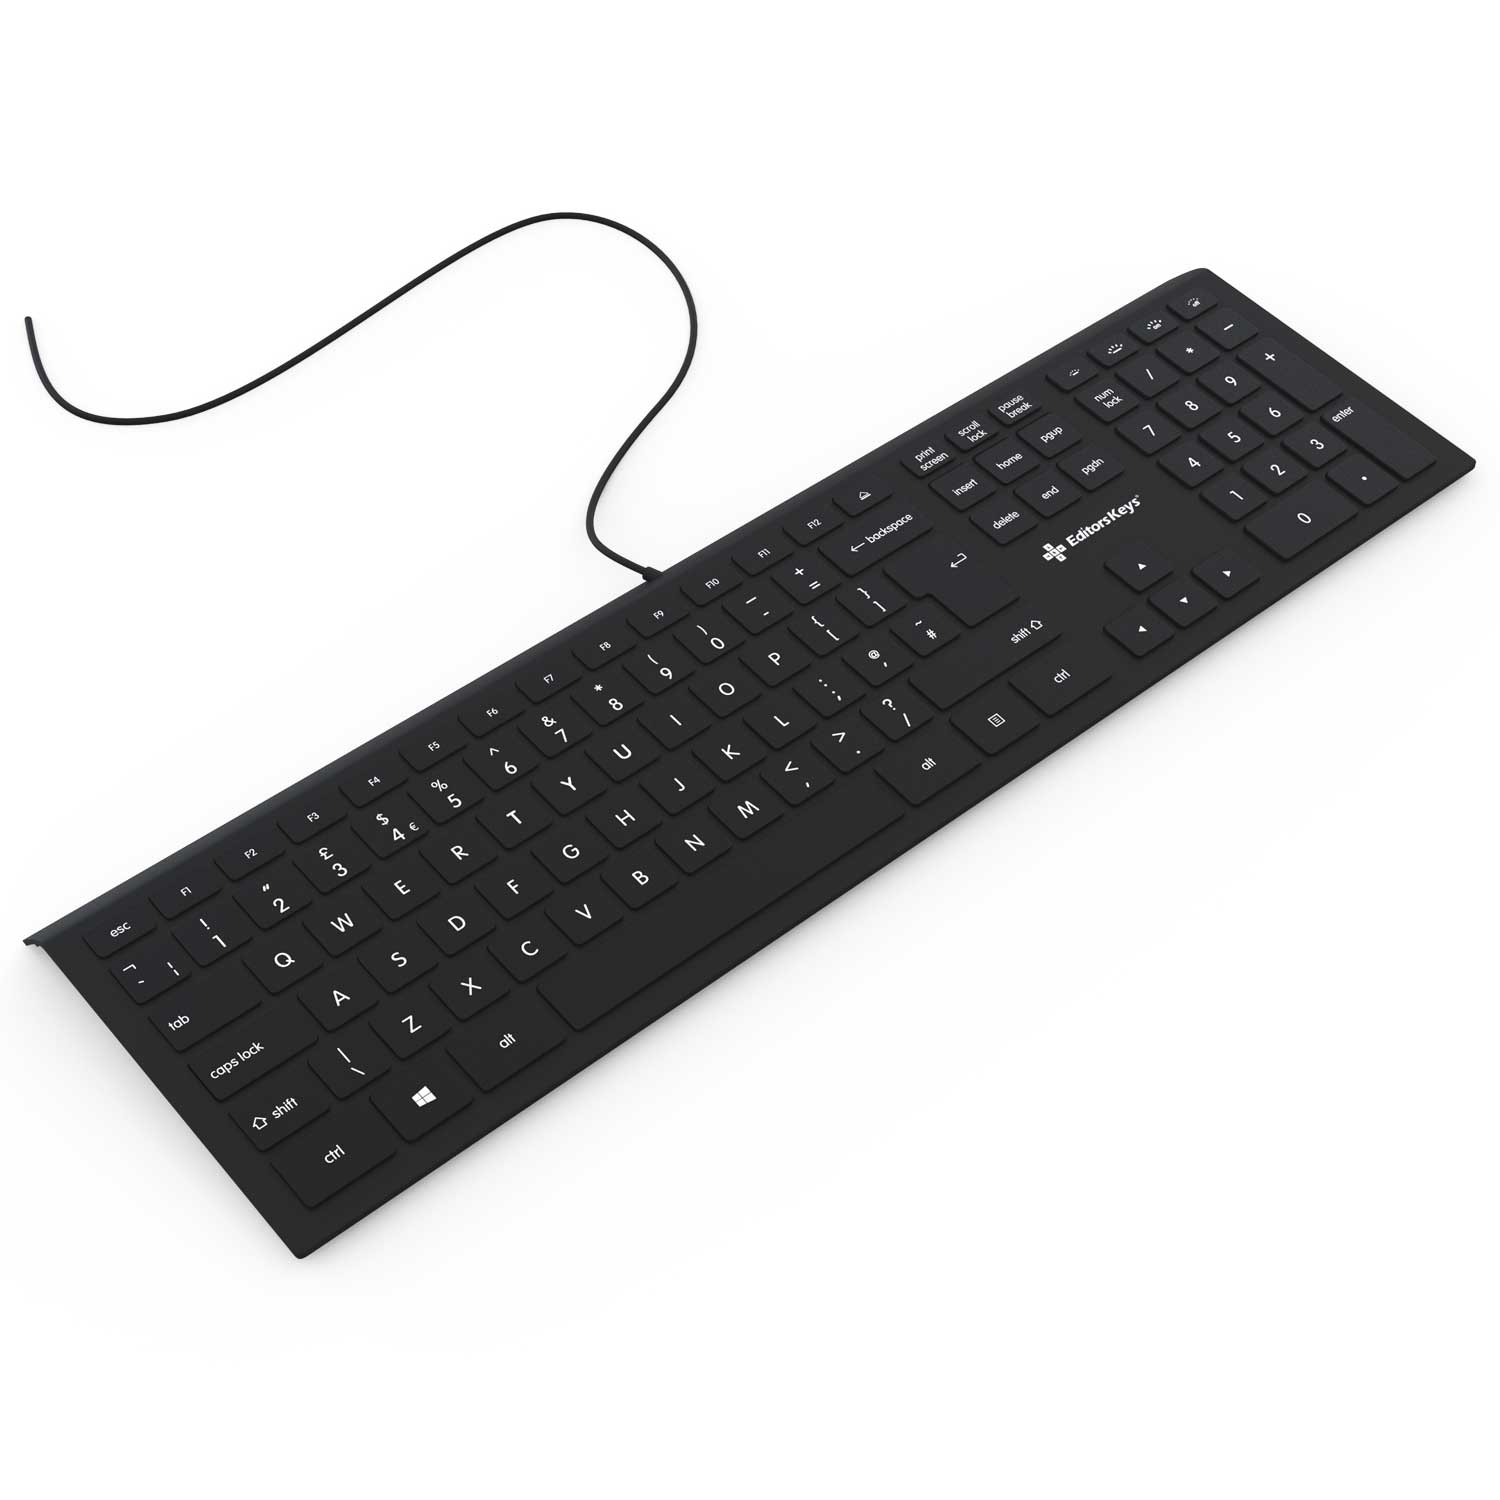 Mos rand Botsing Backlit PC Keyboard - Standard Keyboard